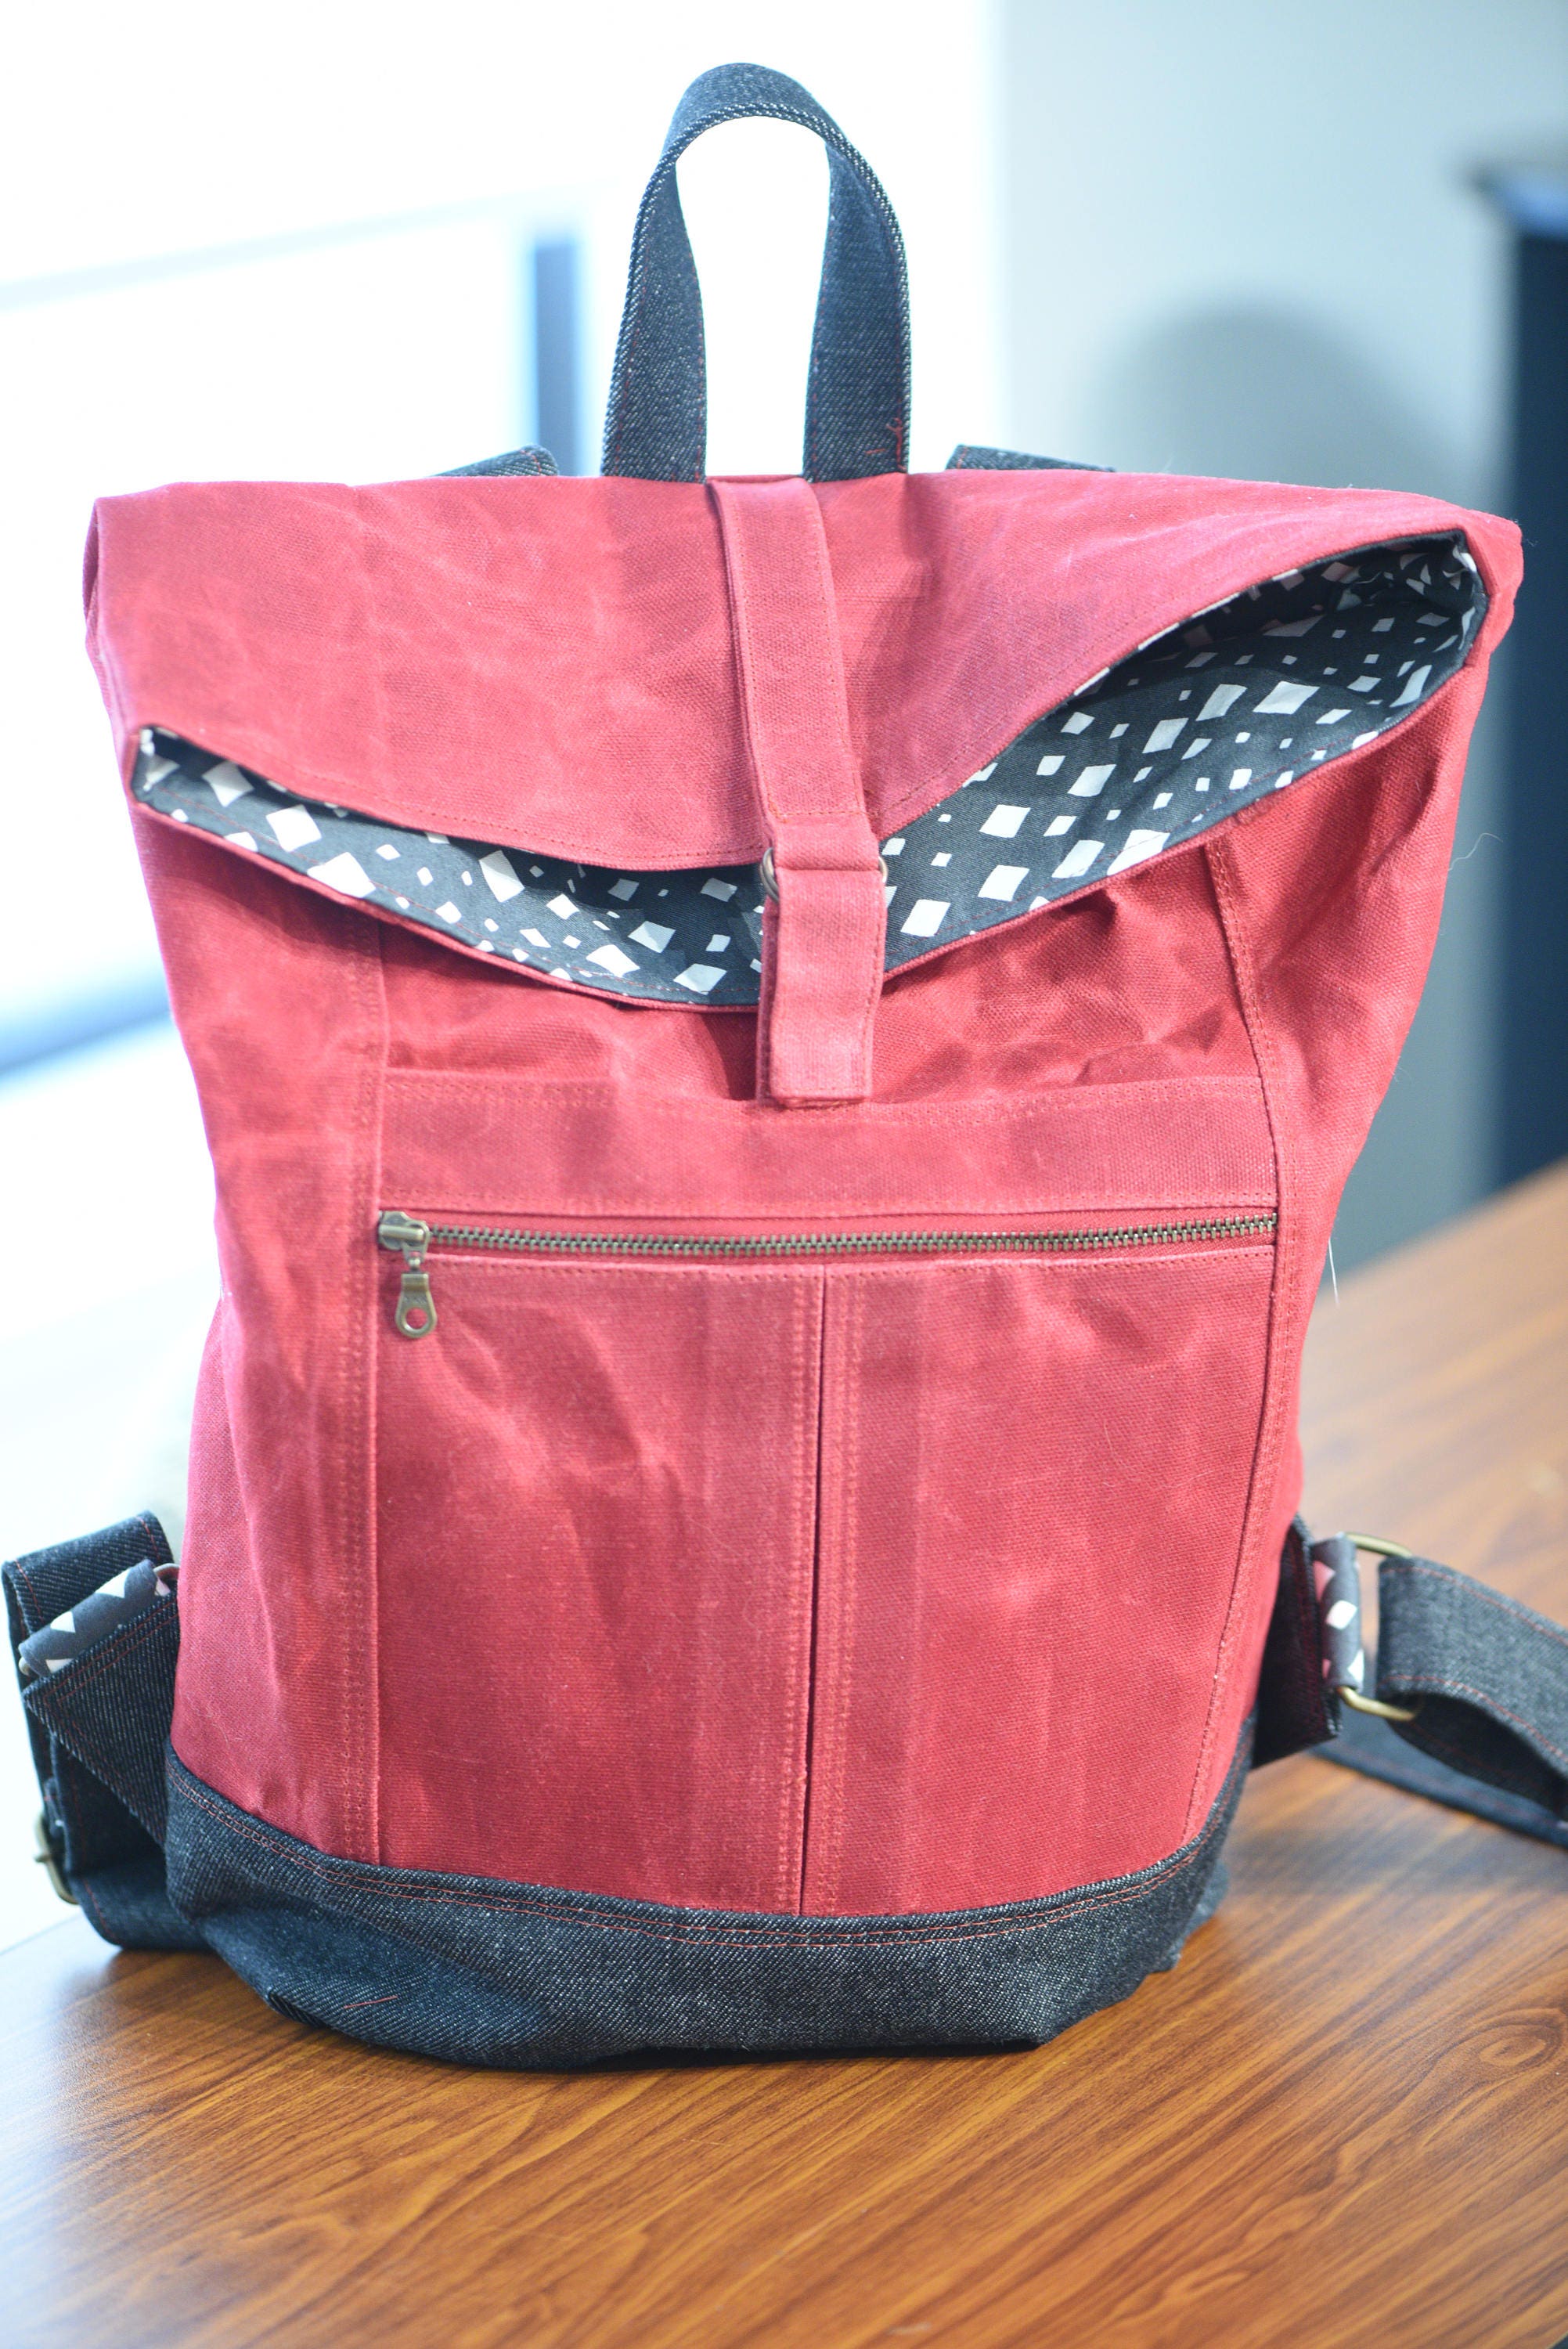 Knitters Backpack, Range Backpack, Large Knitting Bag, Backpack